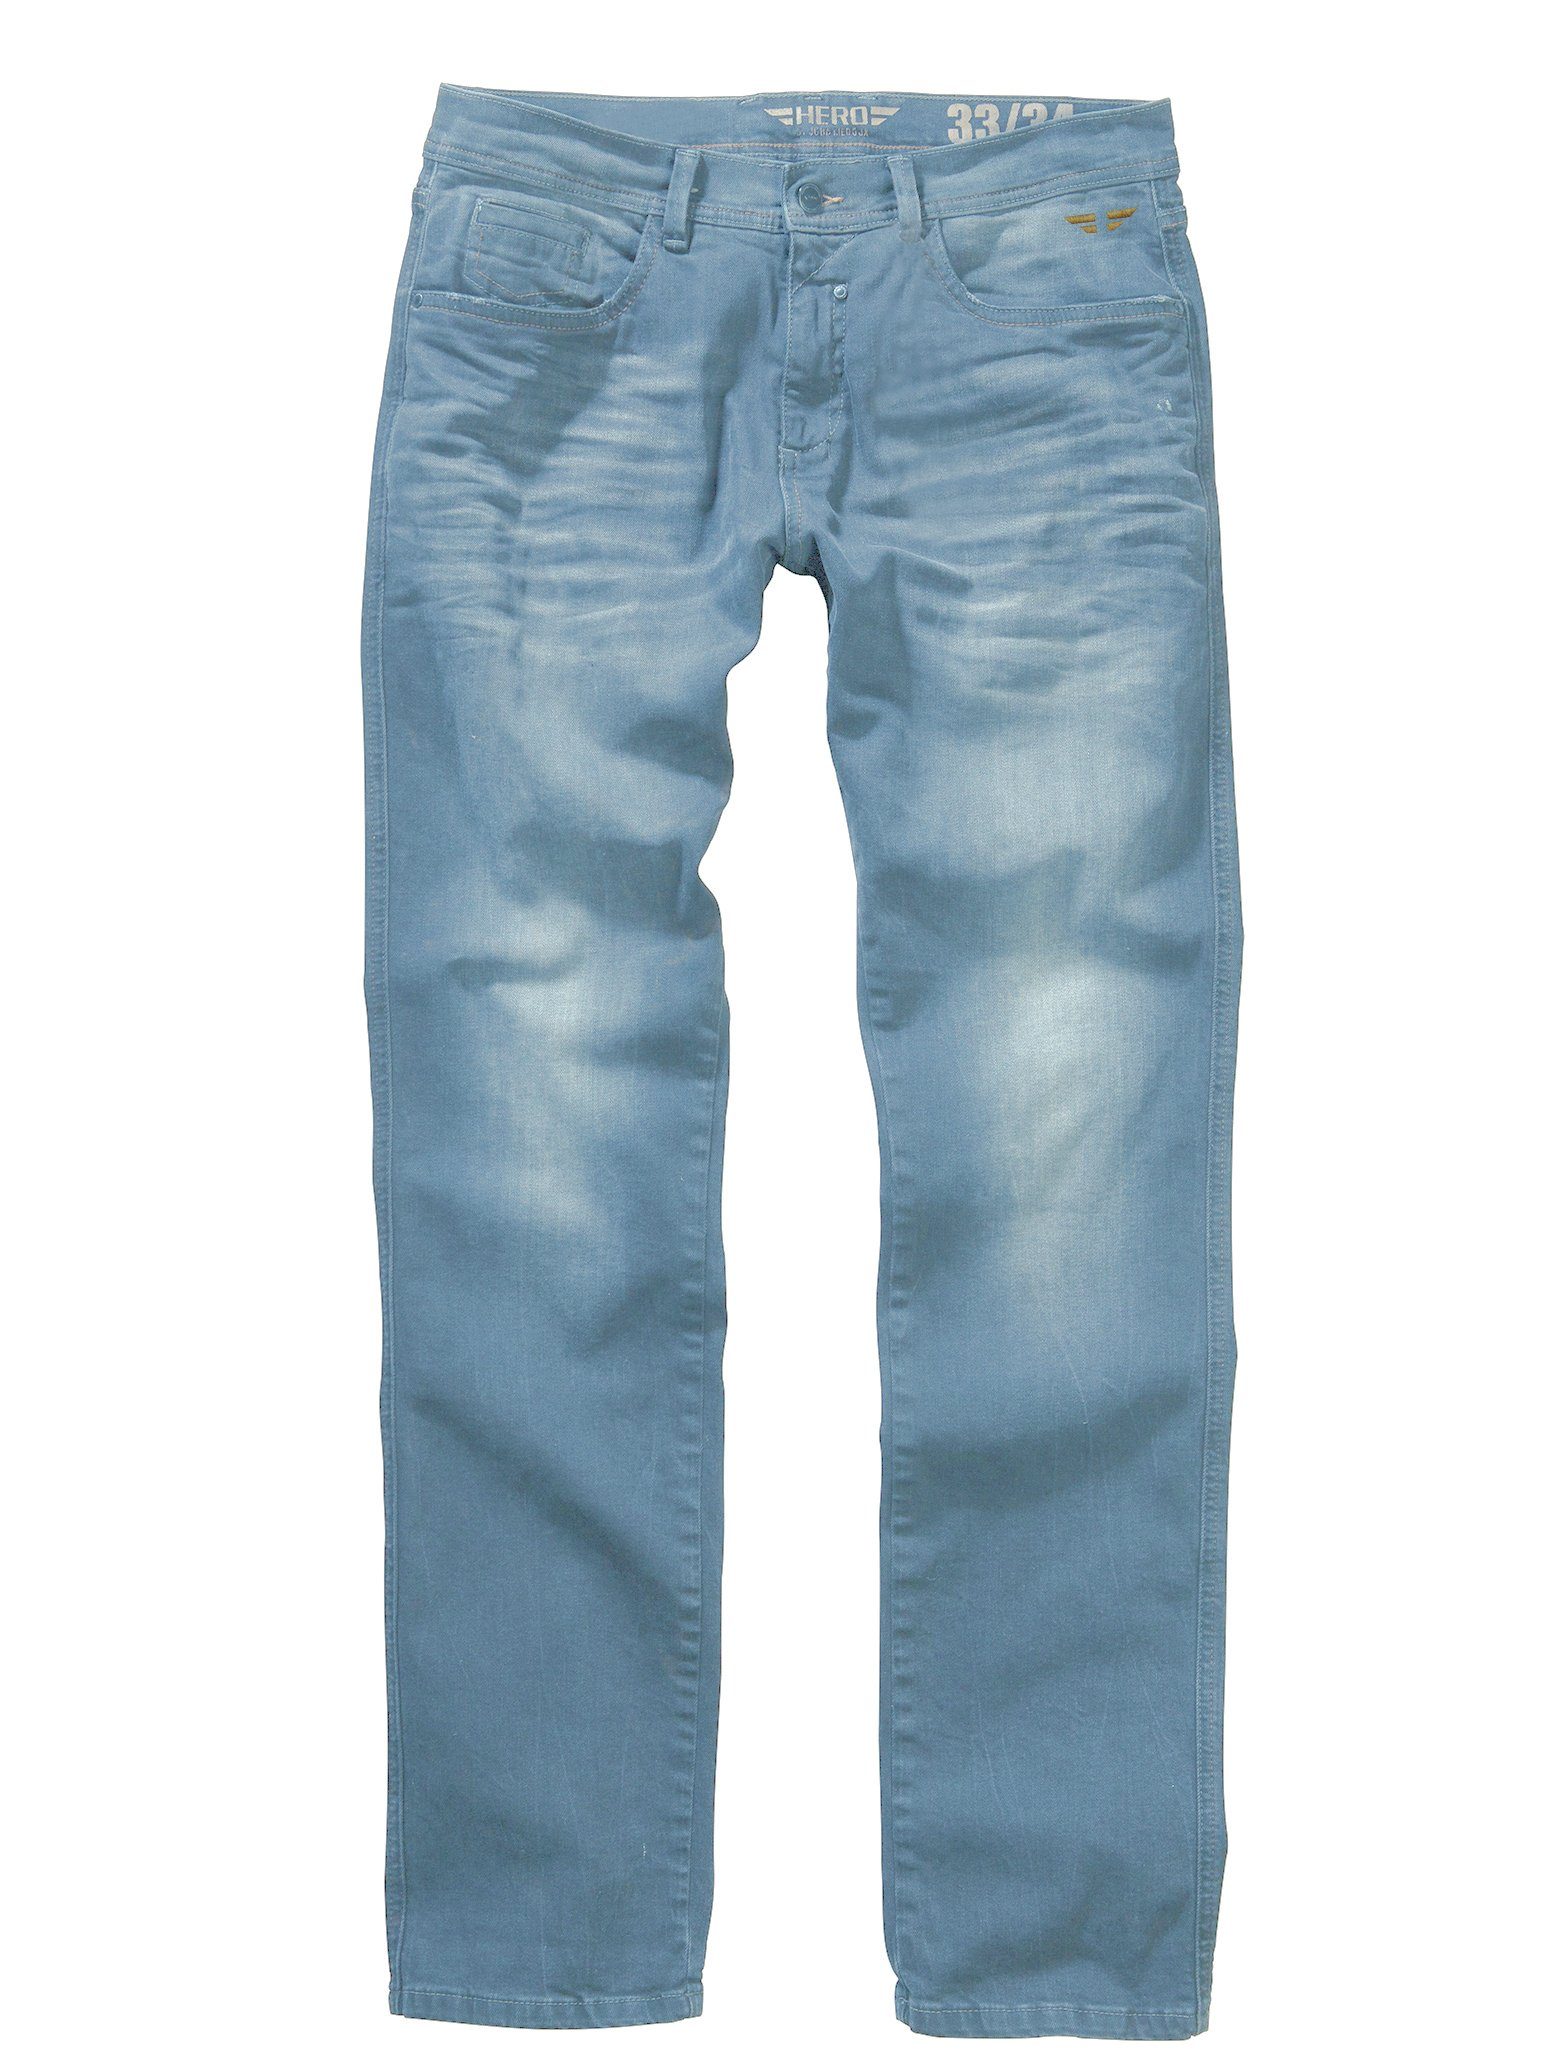 HERO by John Medoox Slim-fit-Jeans HERO PORTLAND Stretch Jeans Hose - Slim Straight Fit - Blue stone used